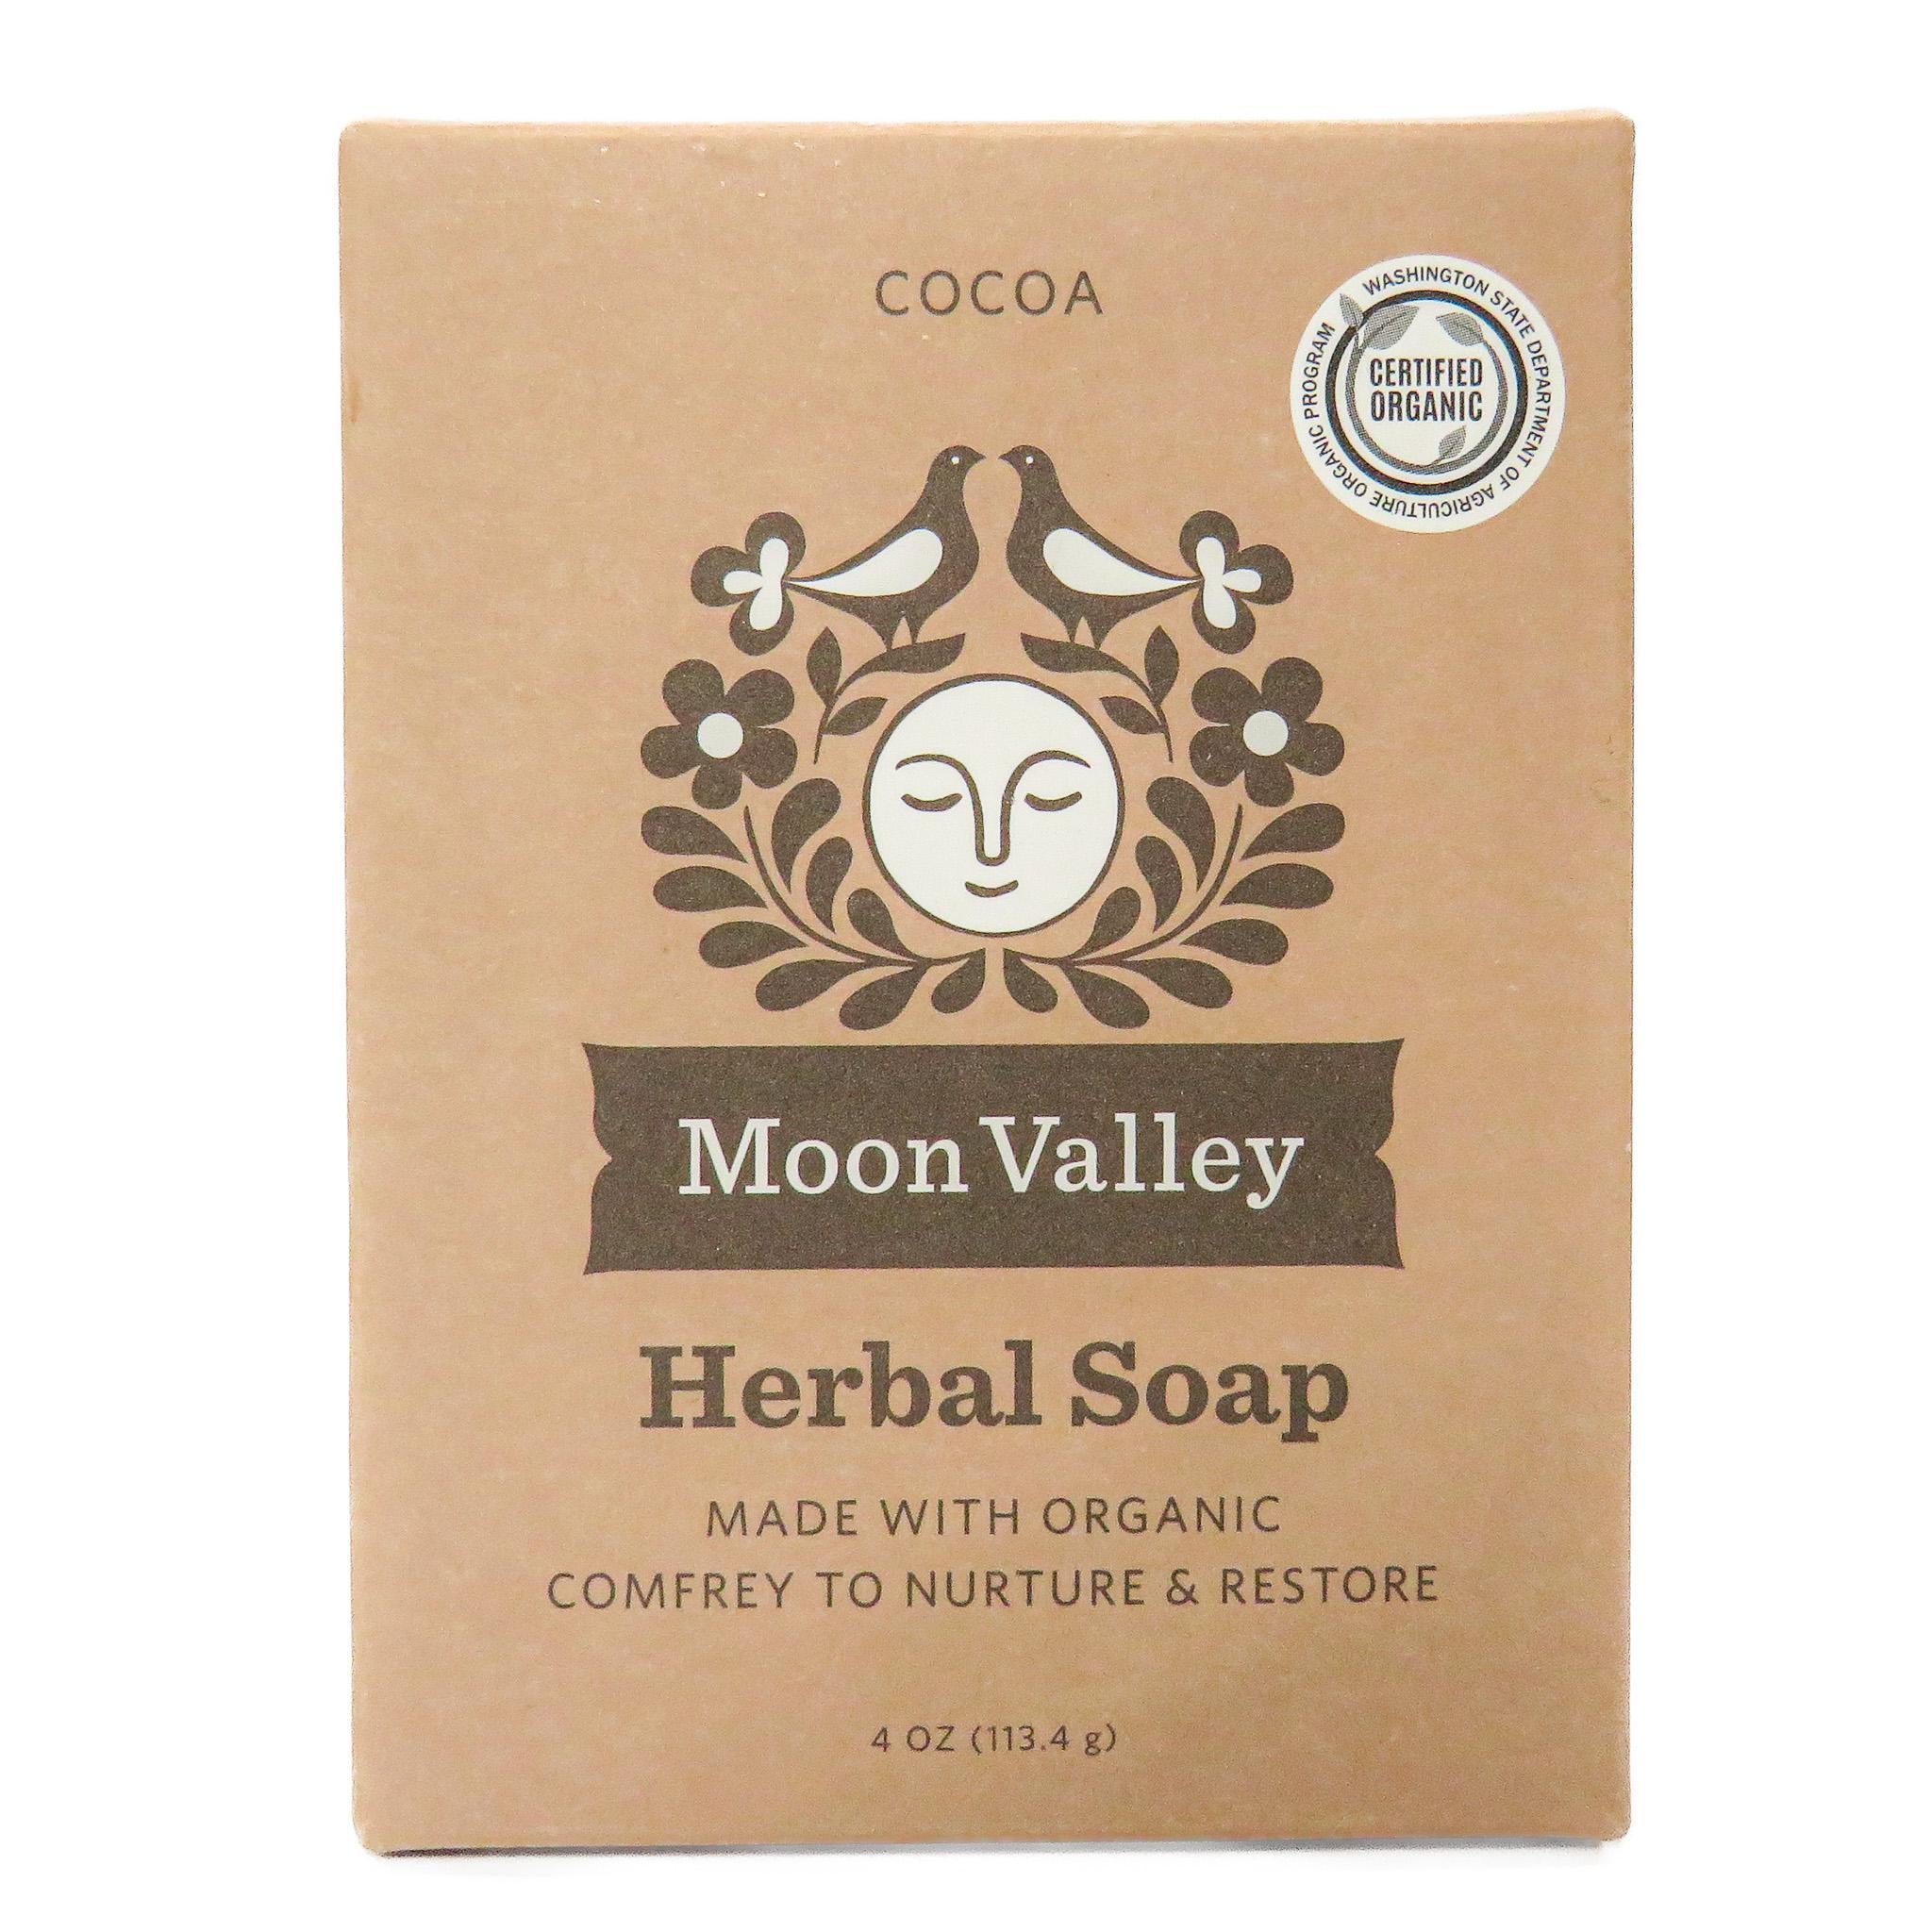 cocoa herbal soap